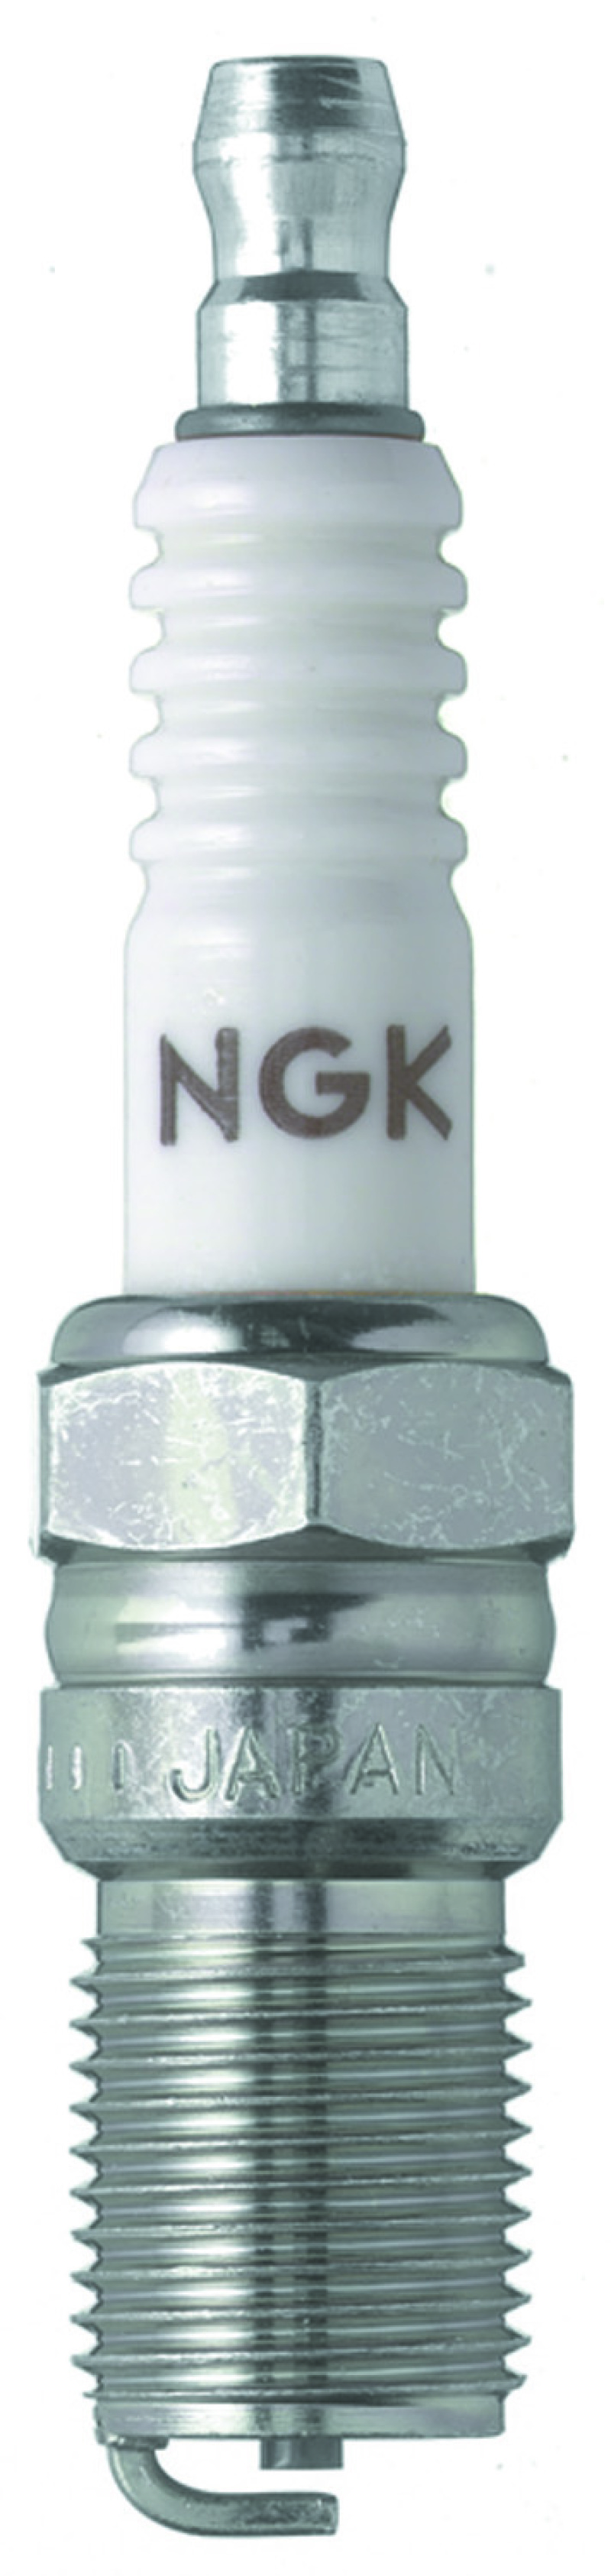 NGK Nickel Spark Plug Box of 10 (B8EFS) - 1049